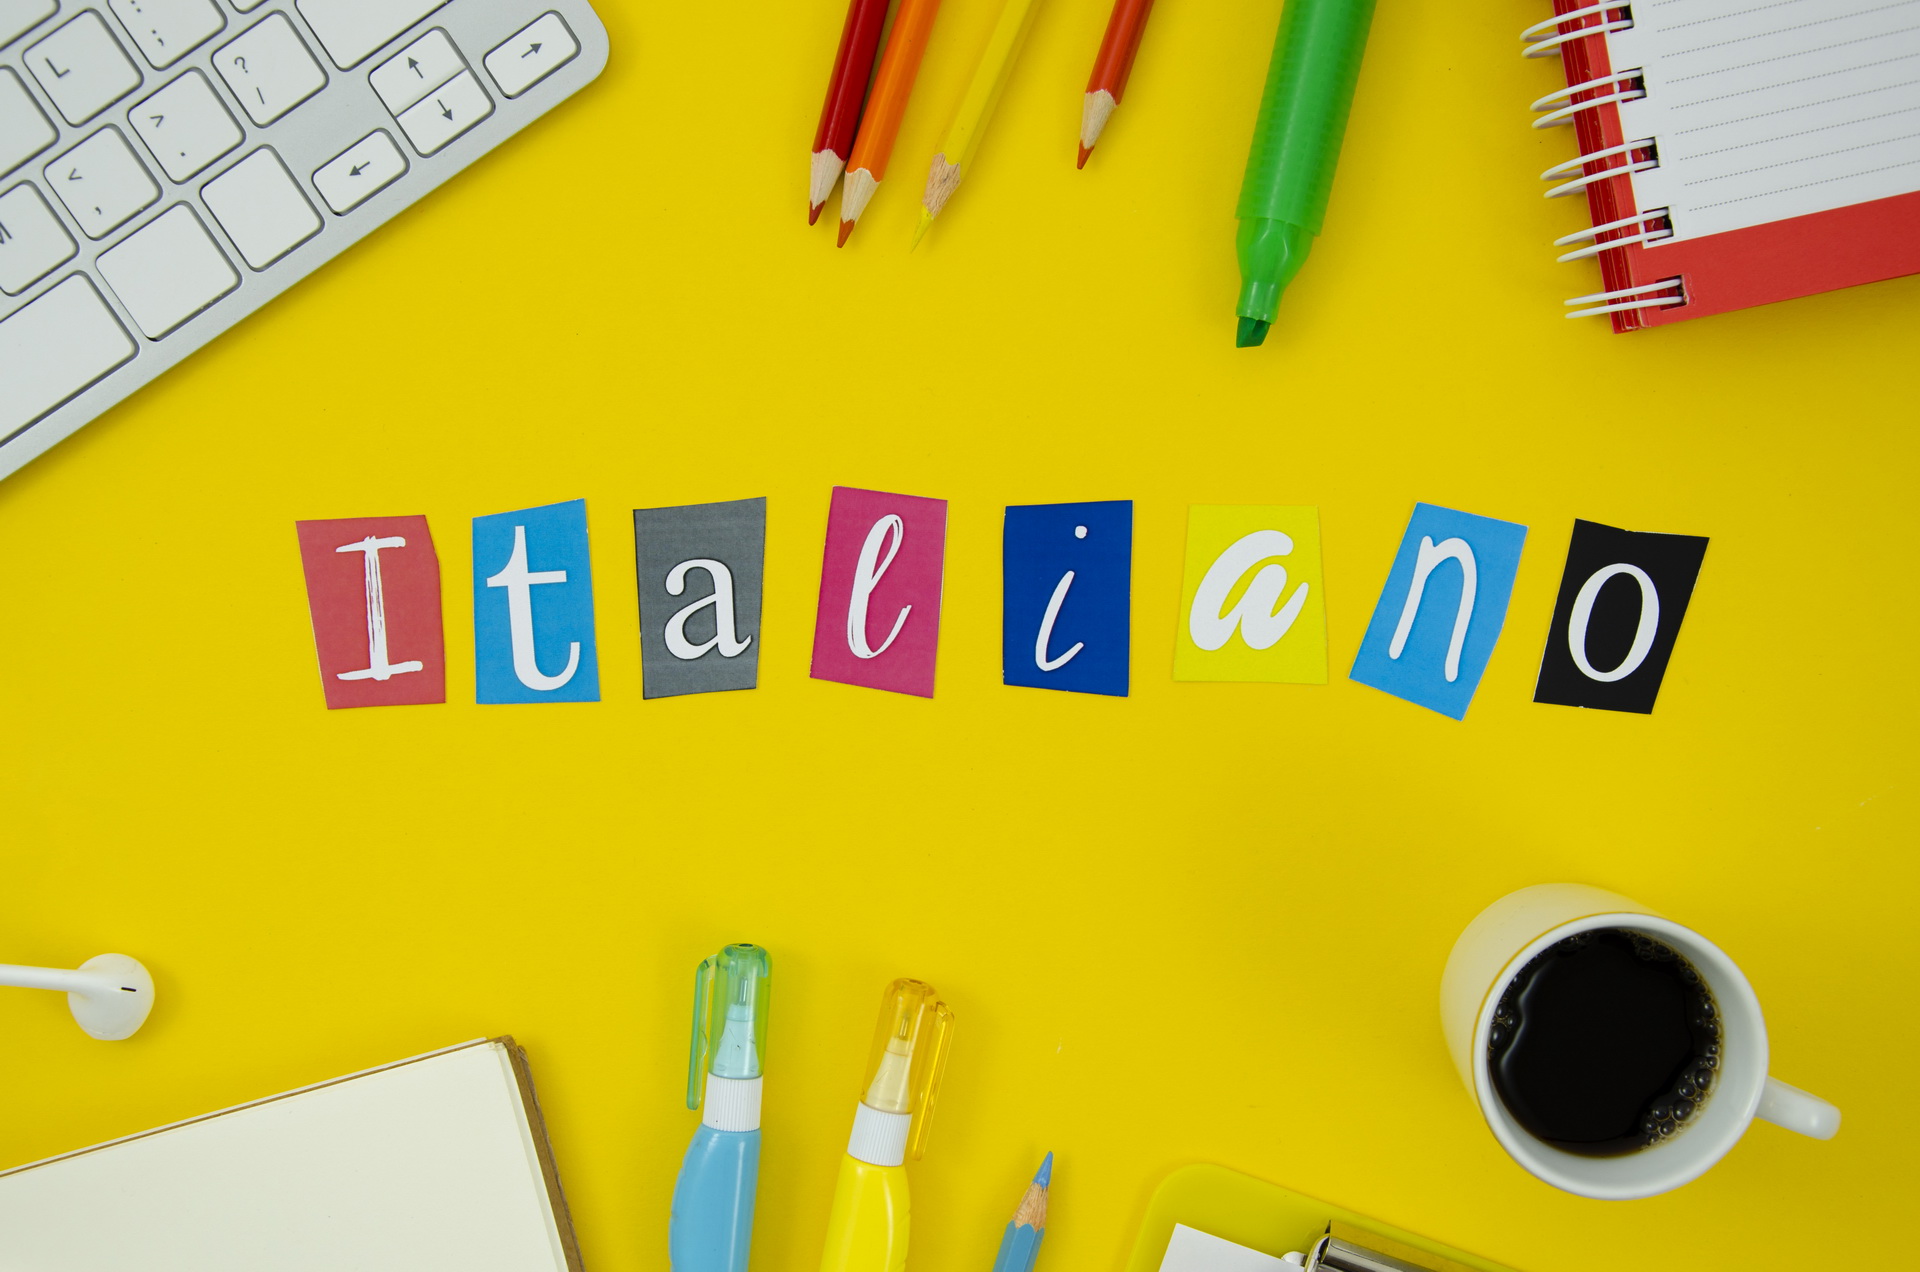 Italian language courses for advanced learners